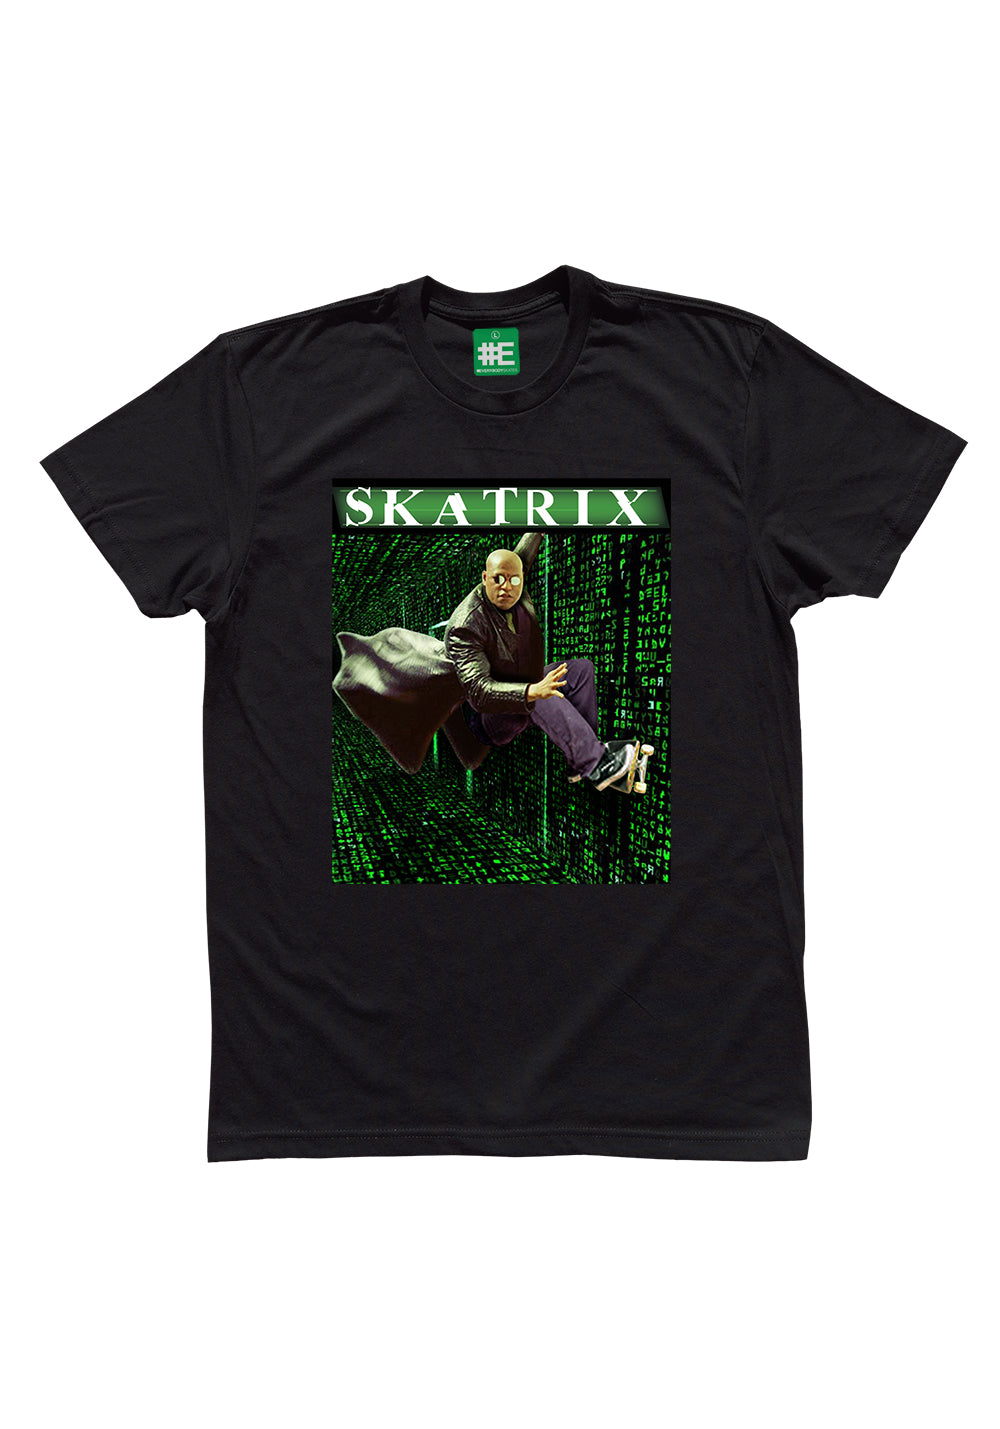 Skatrix Graphic T-shirt